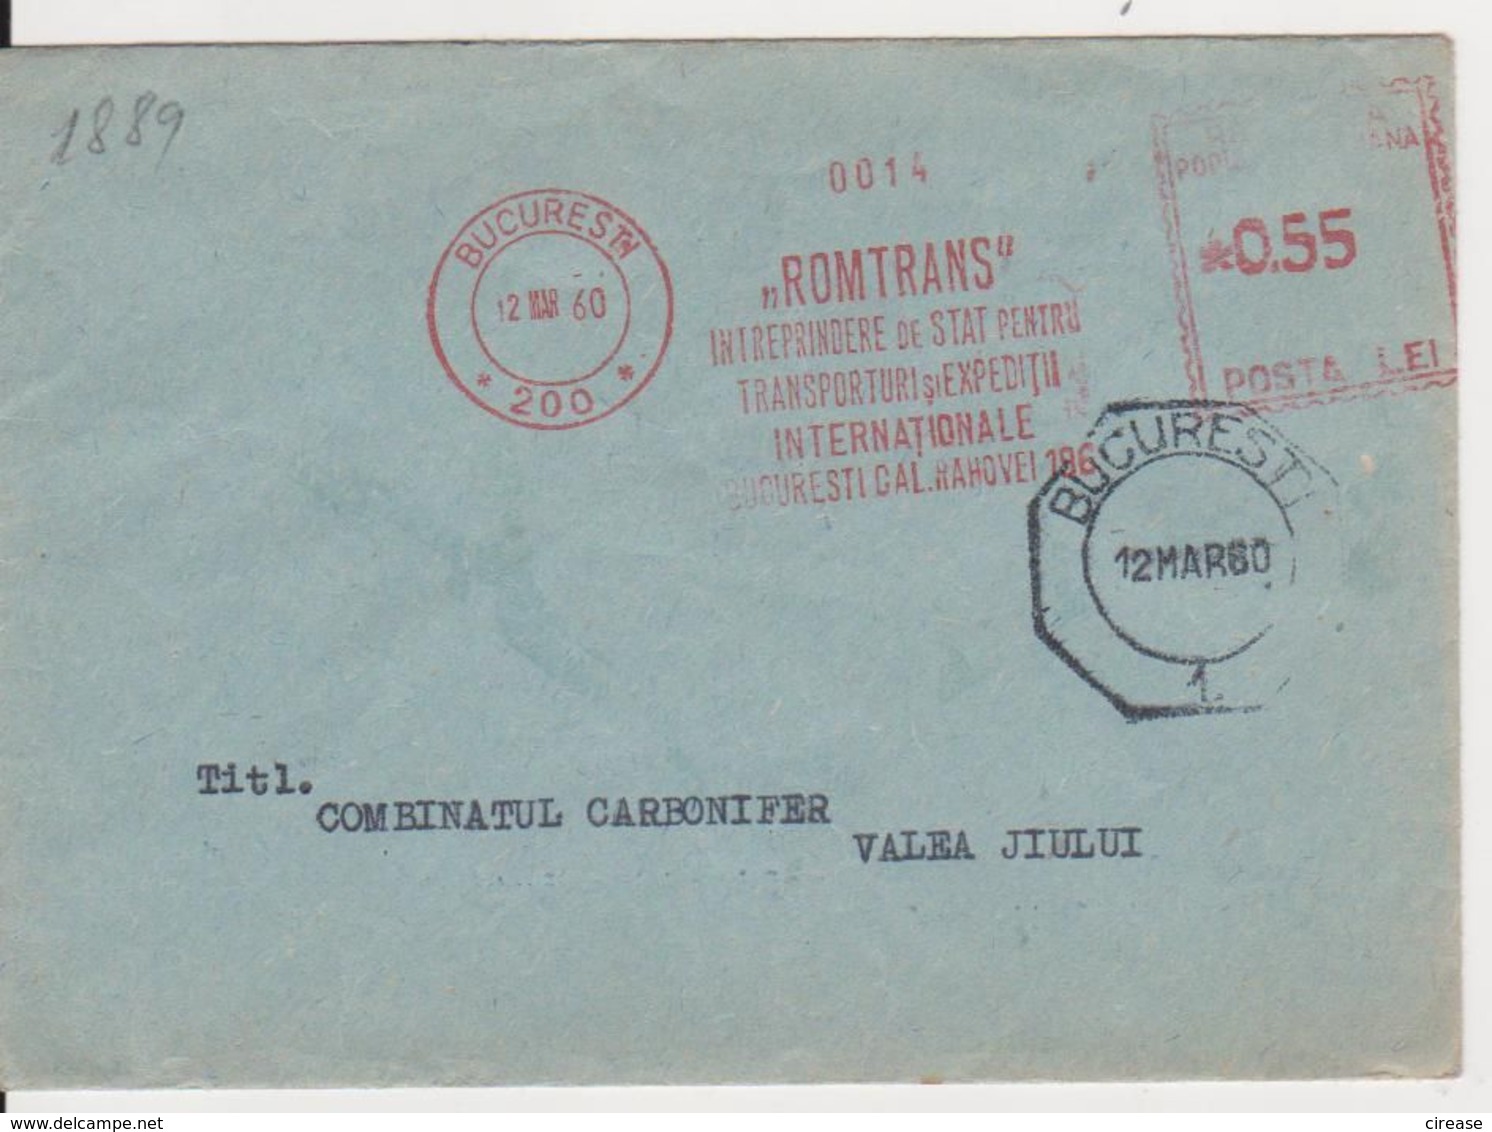 BUCURESTI AMONT 0,55, ROMTRANS INTERNATIONAL TRANSPORT RED MACHINE ATM STAMPS, ROMANIA 1960 - Frankeermachines (EMA)